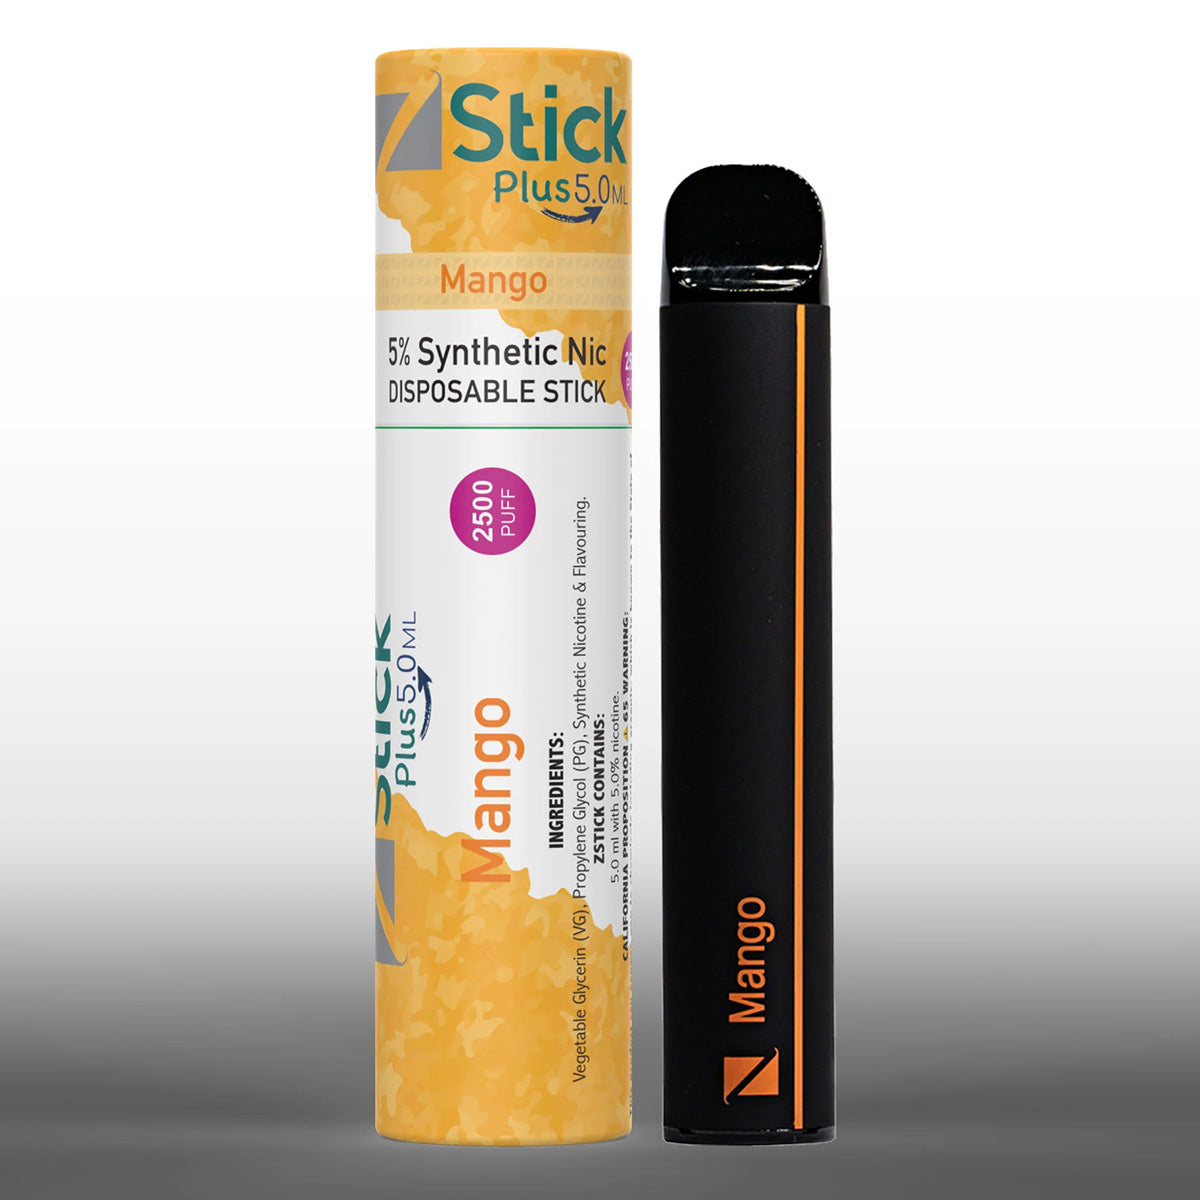 A Ziip Stick Mango vape device next to its packaging.